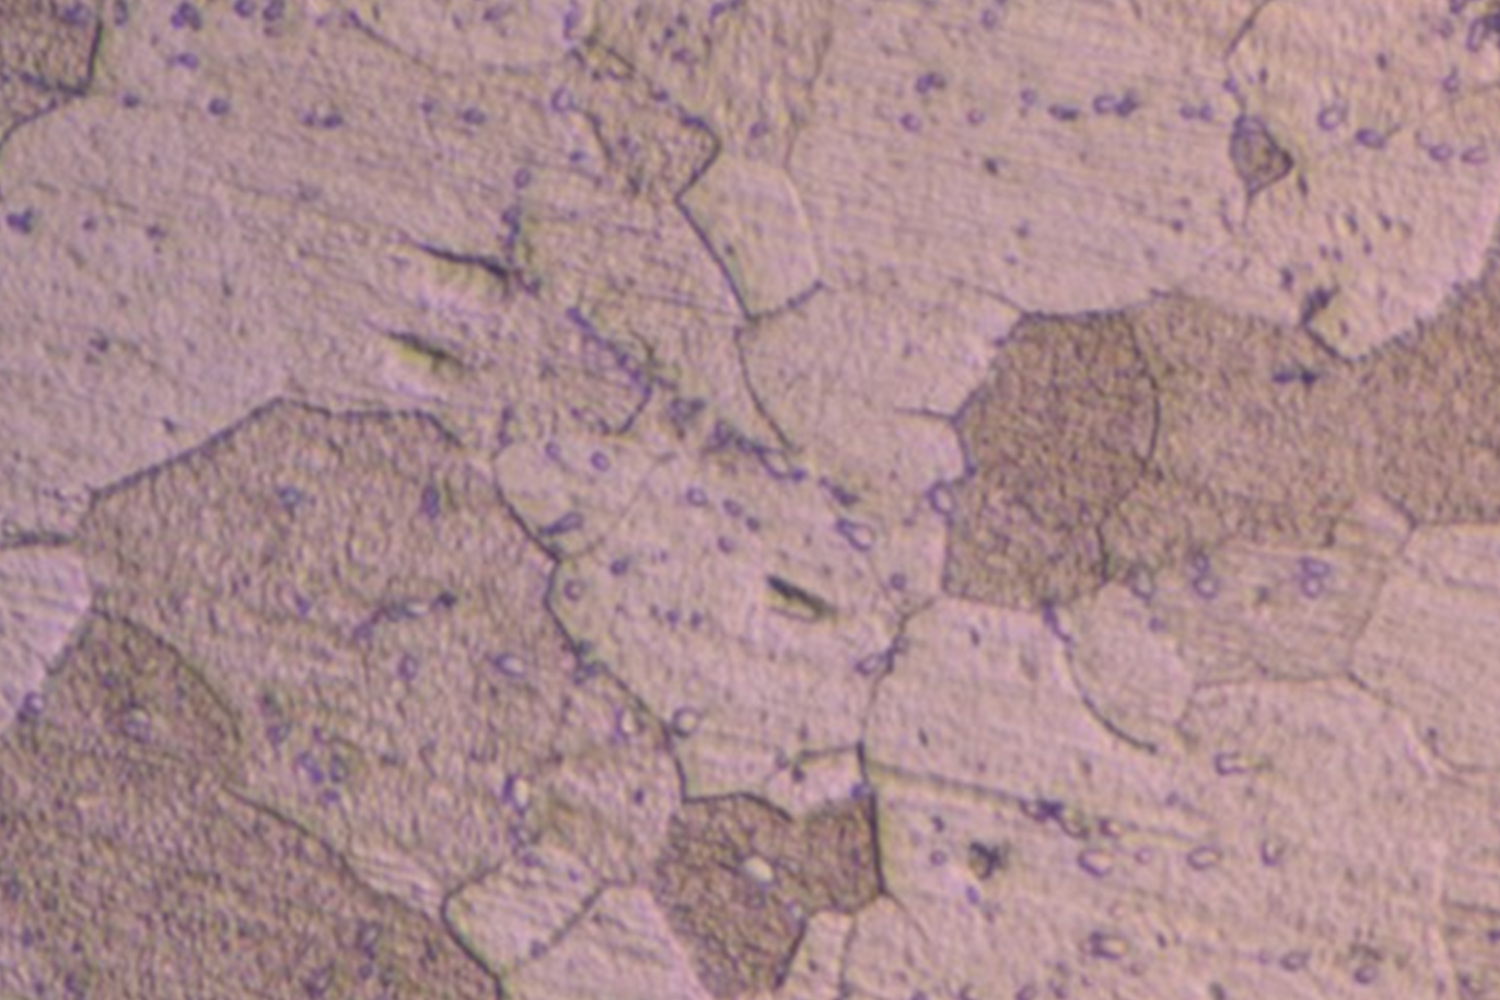 Materials sample under microscope